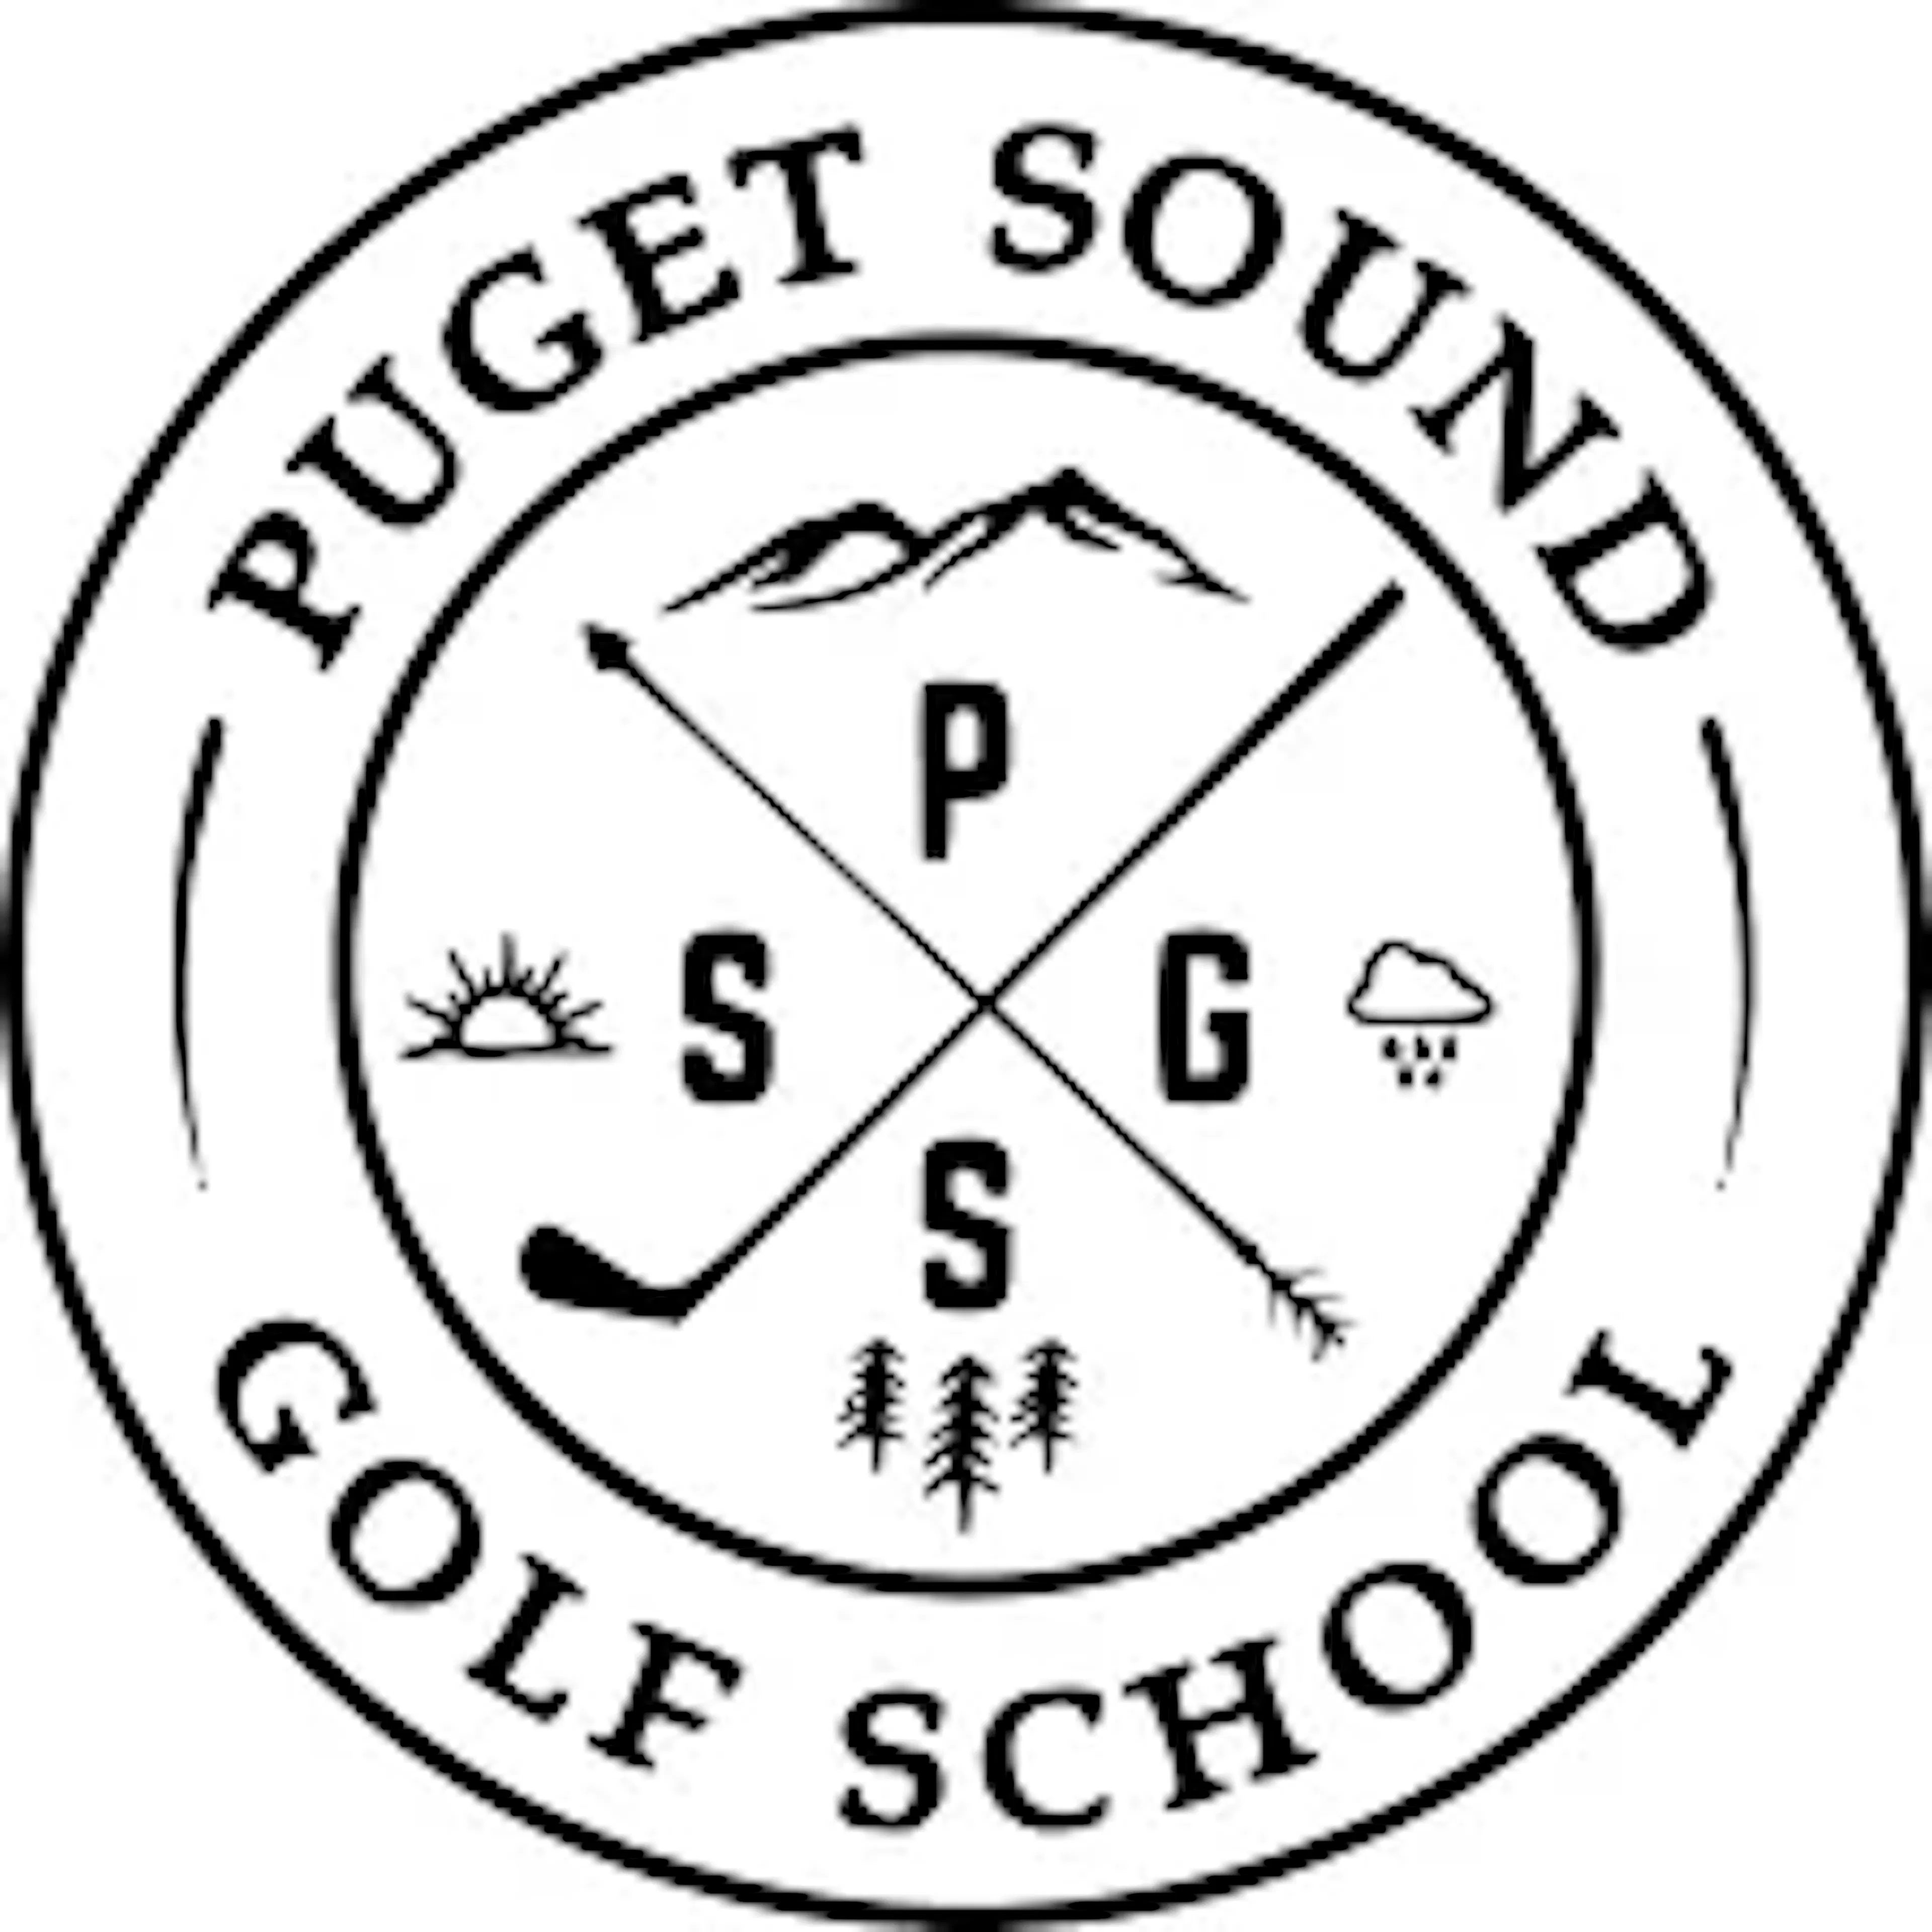 puget sound golf club